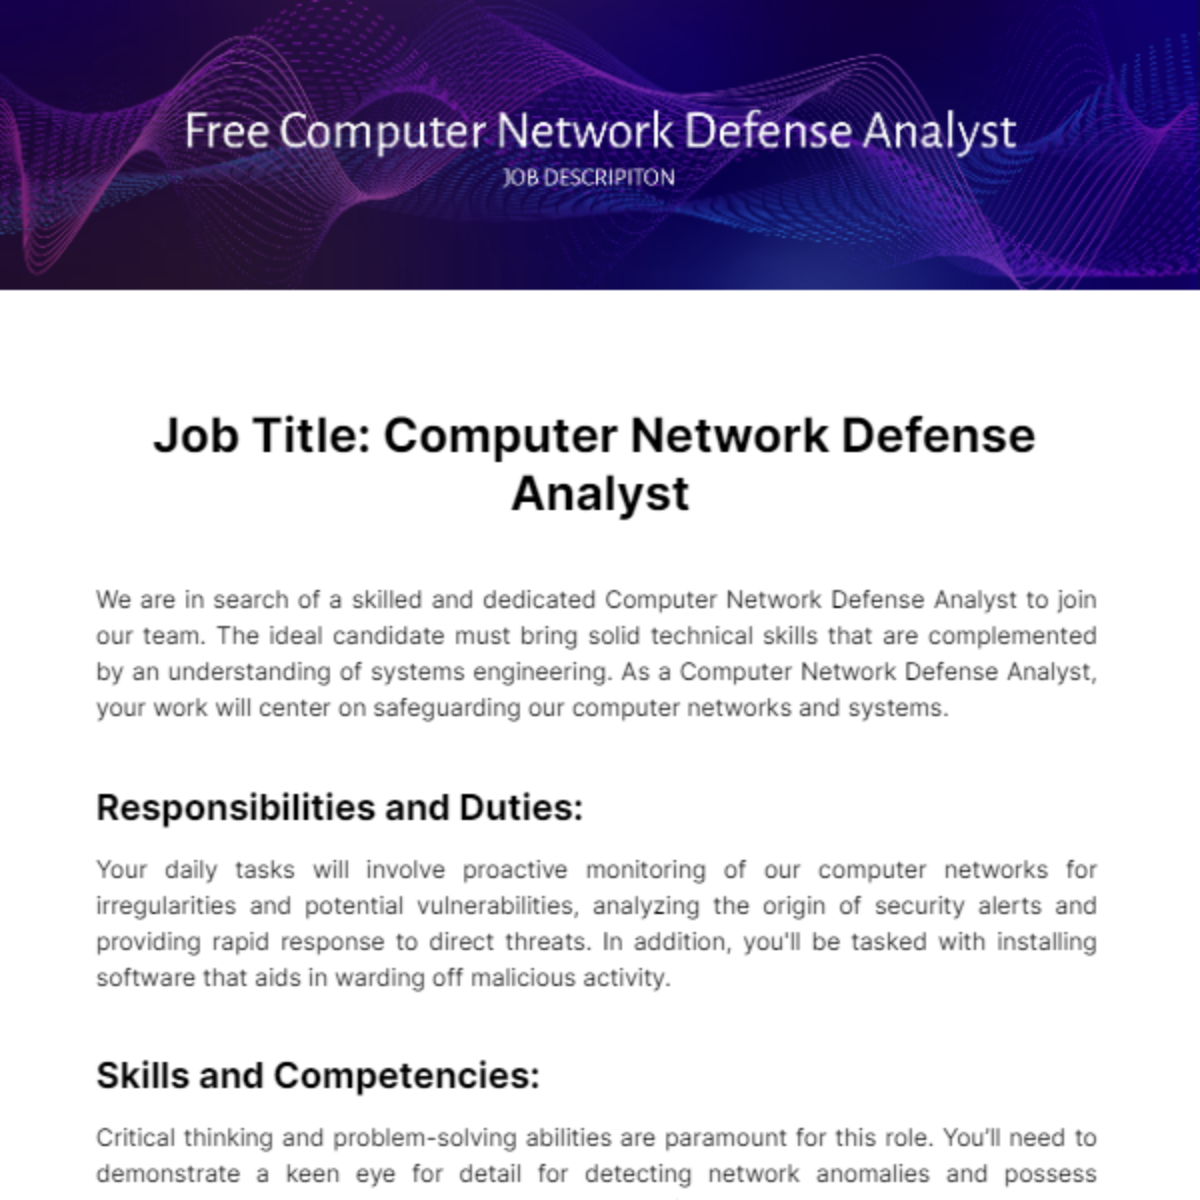 Free Computer Network Defense Analyst Job Description Template